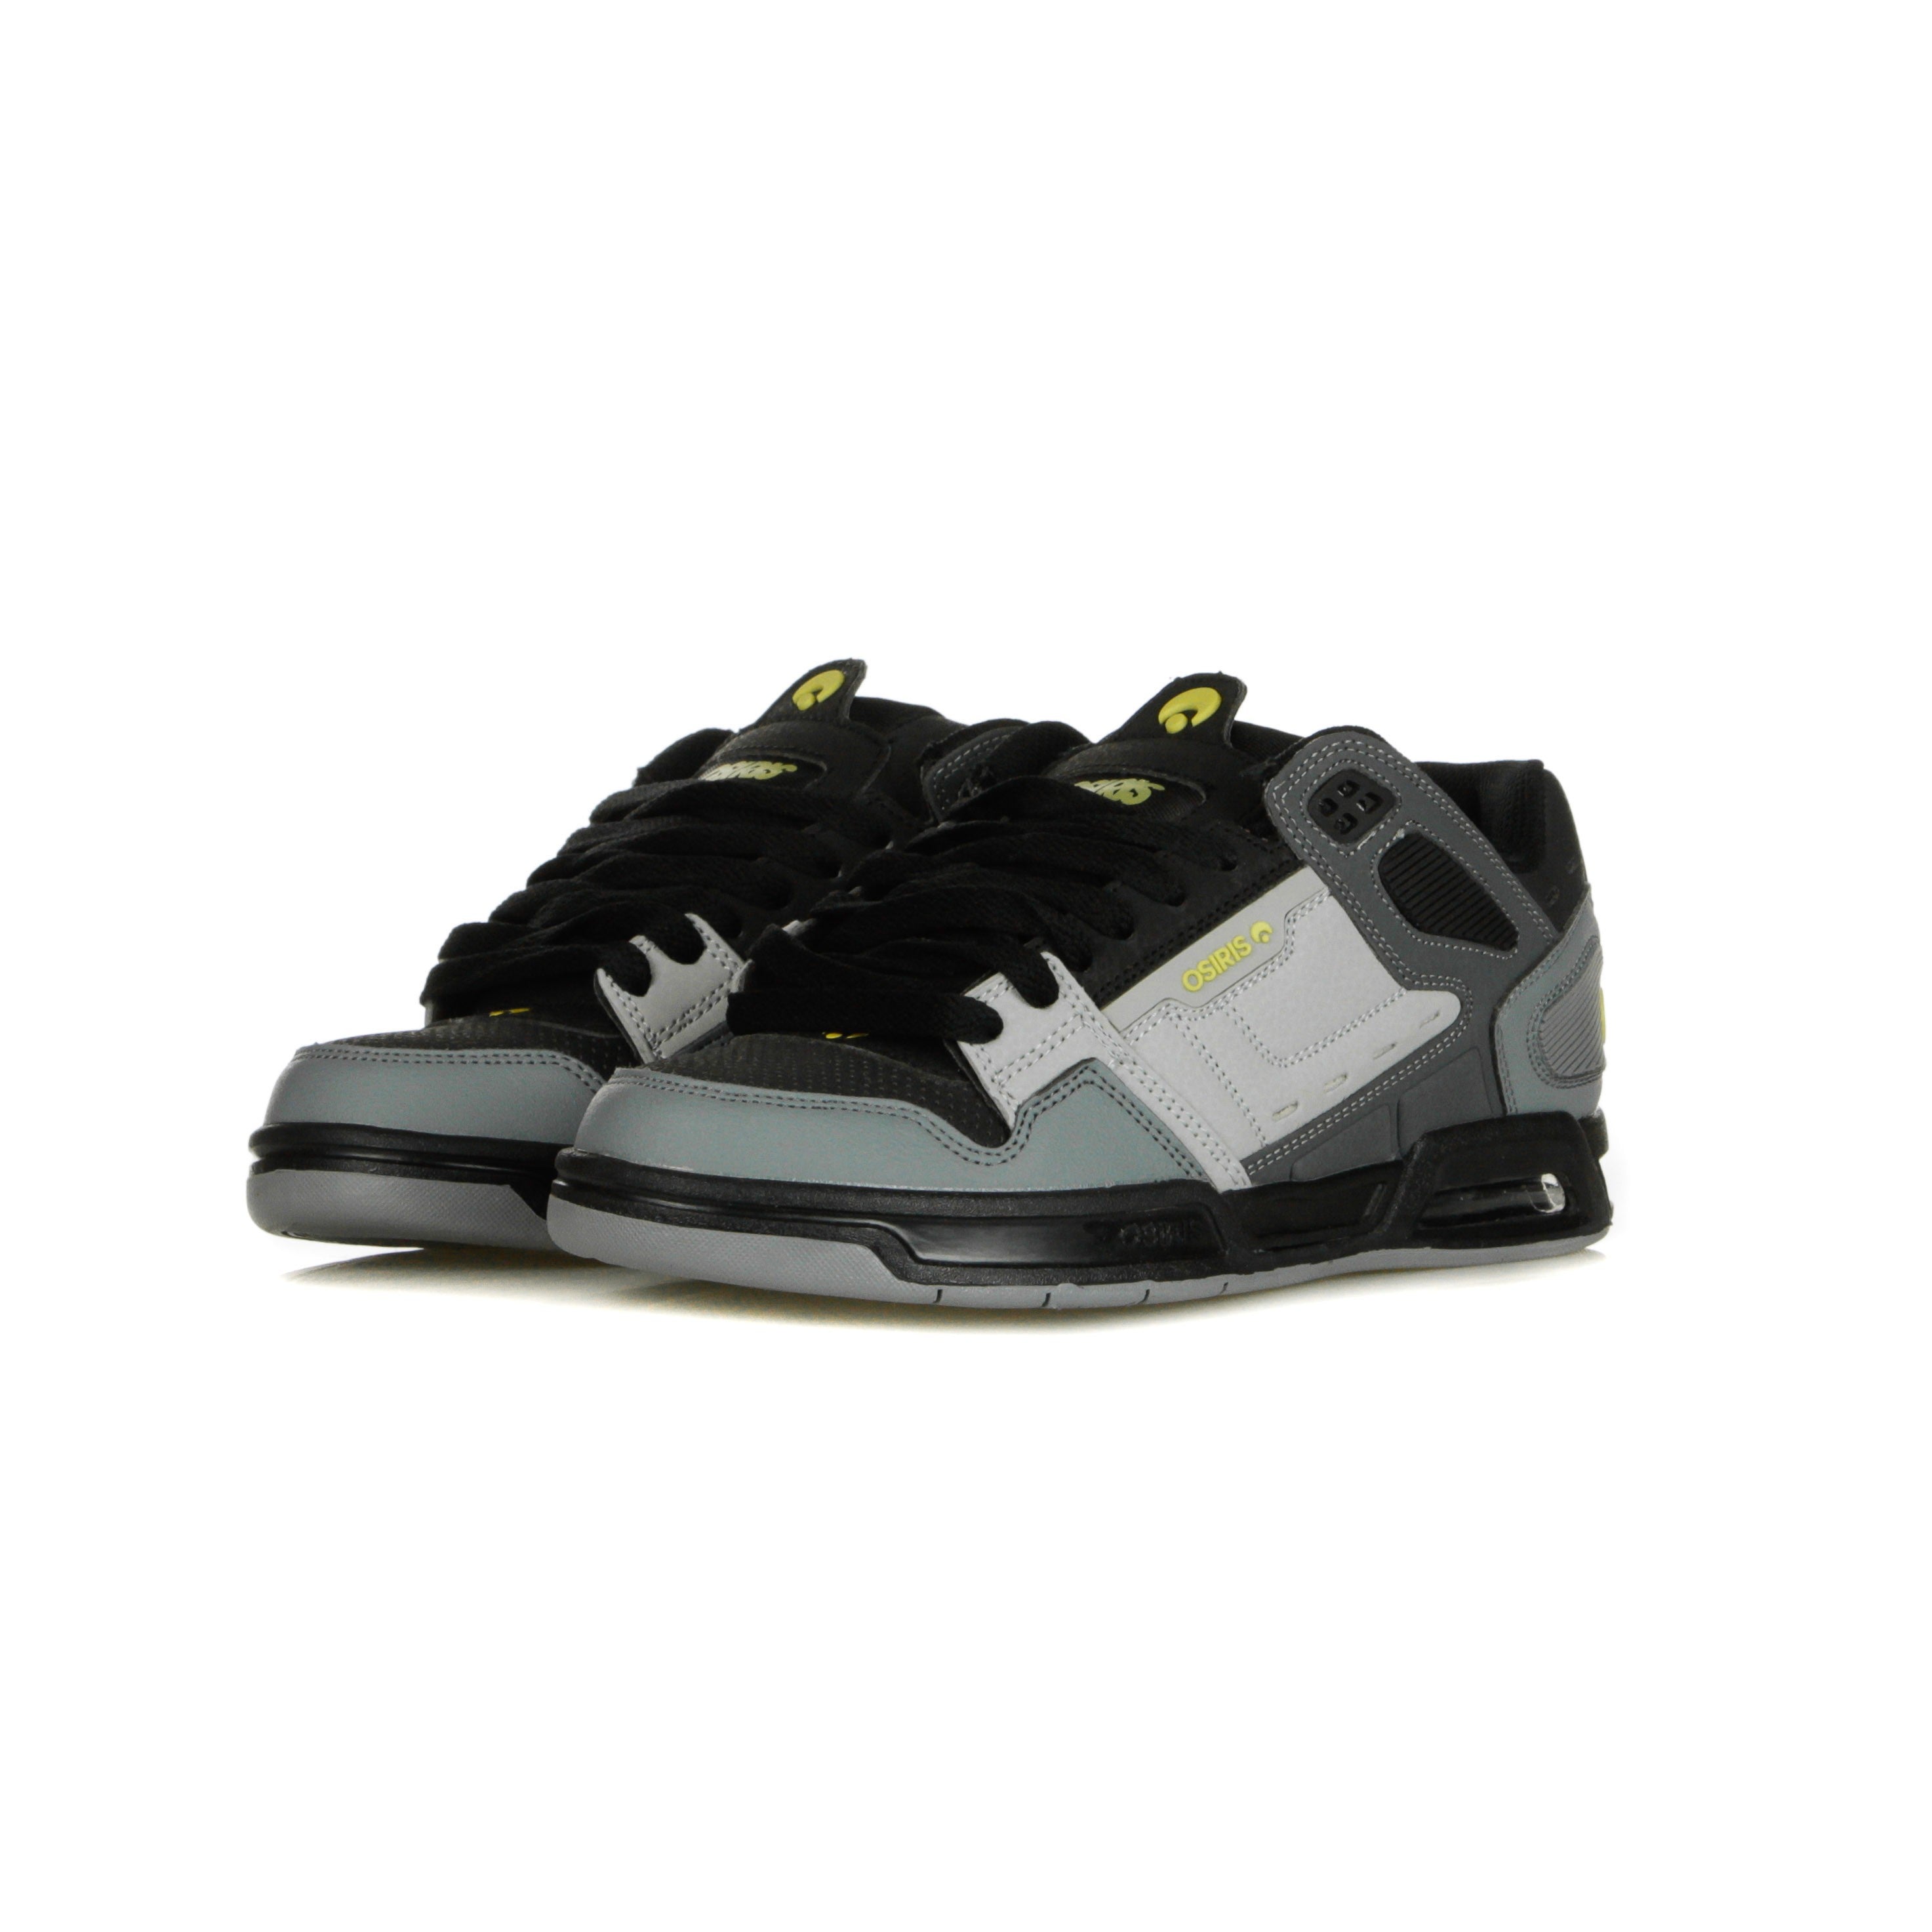 Peril Men's Skate Shoes Charcoal/black/yellow